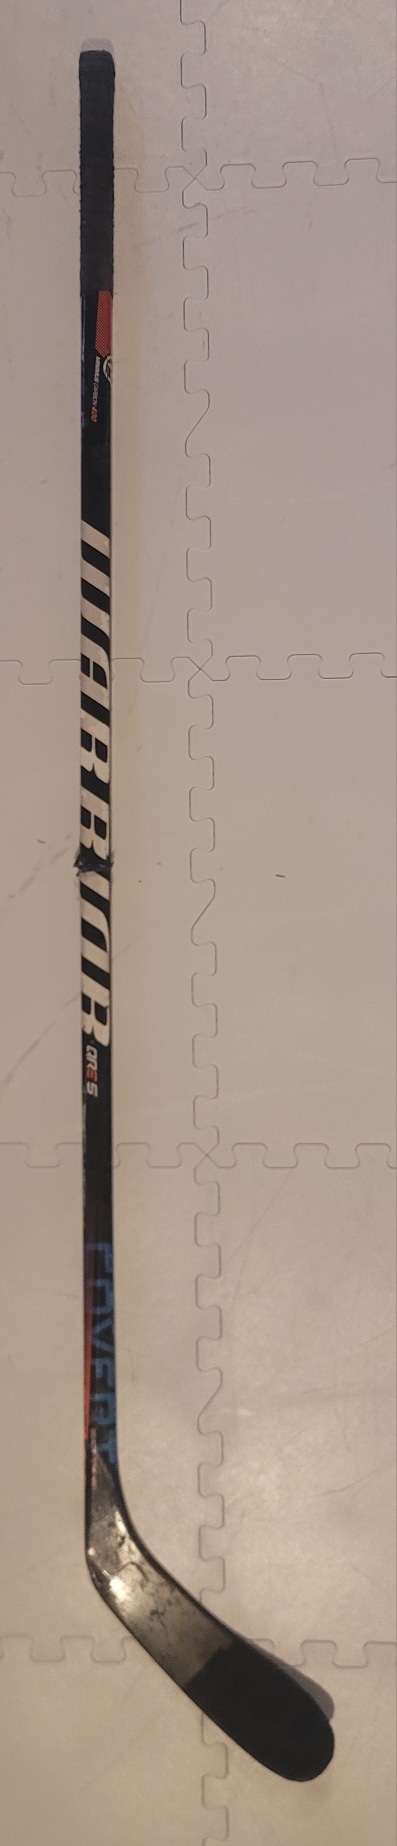 Intermediate Used Left Hand Warrior Covert QRE5 Hockey Stick P28